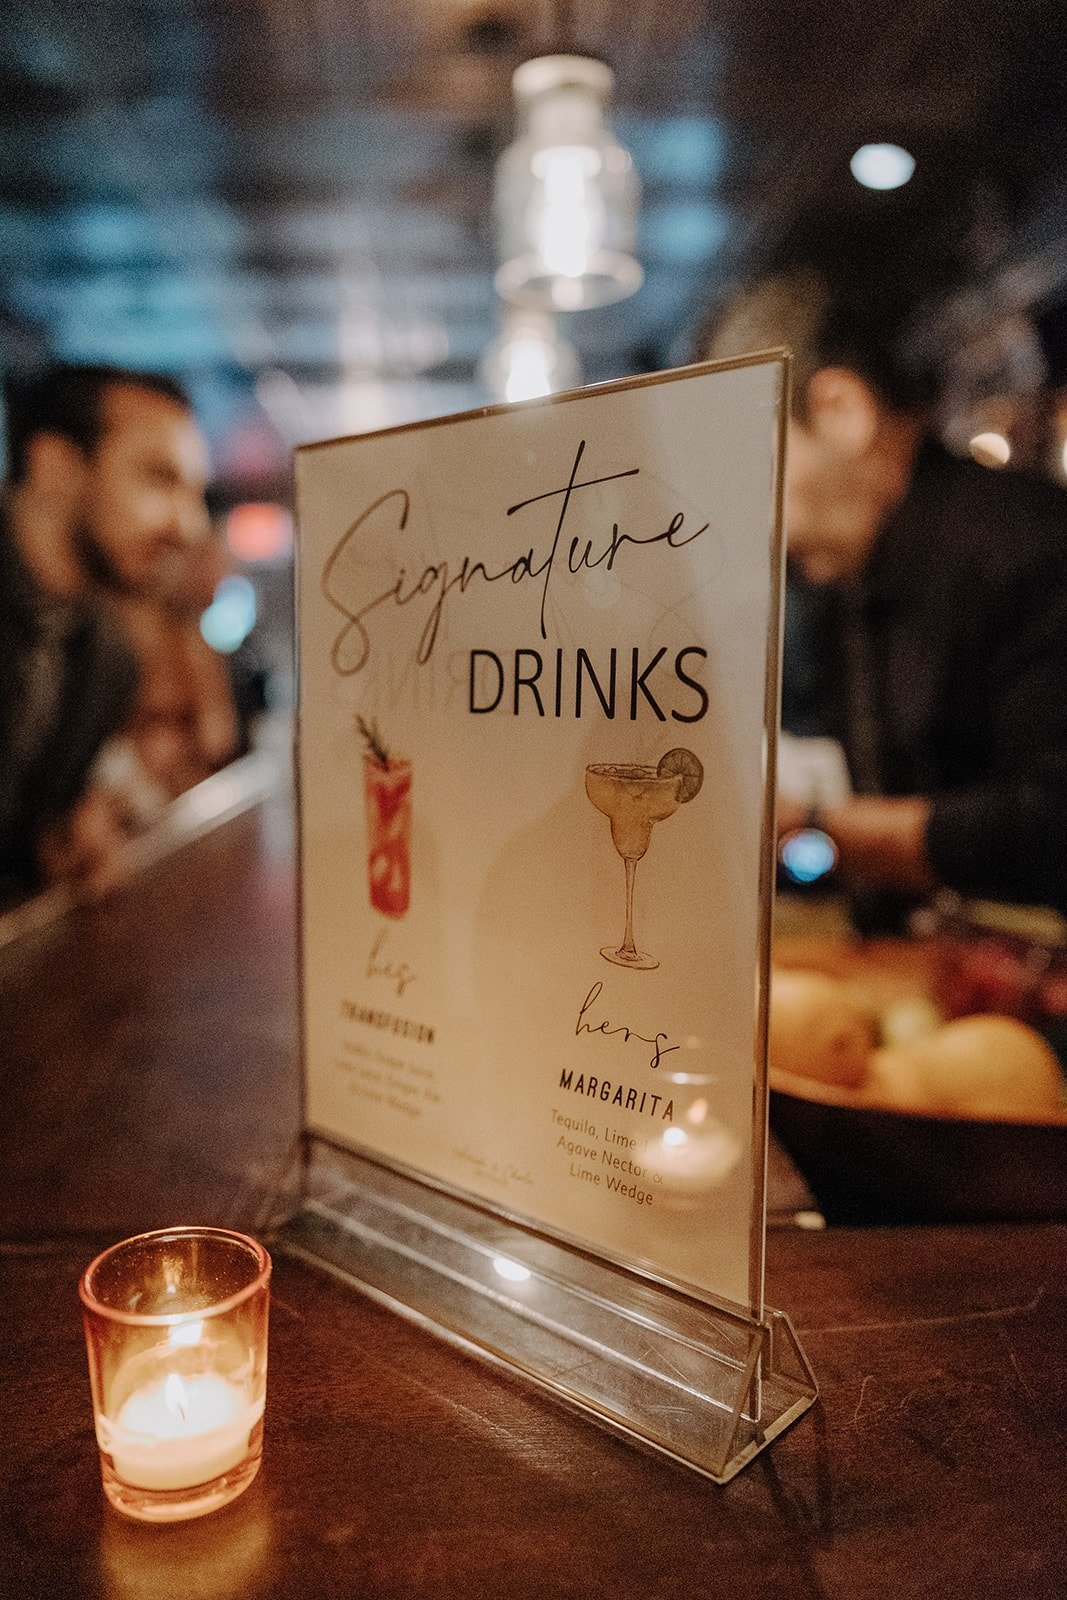 Signature Drinks menu at New York wedding reception